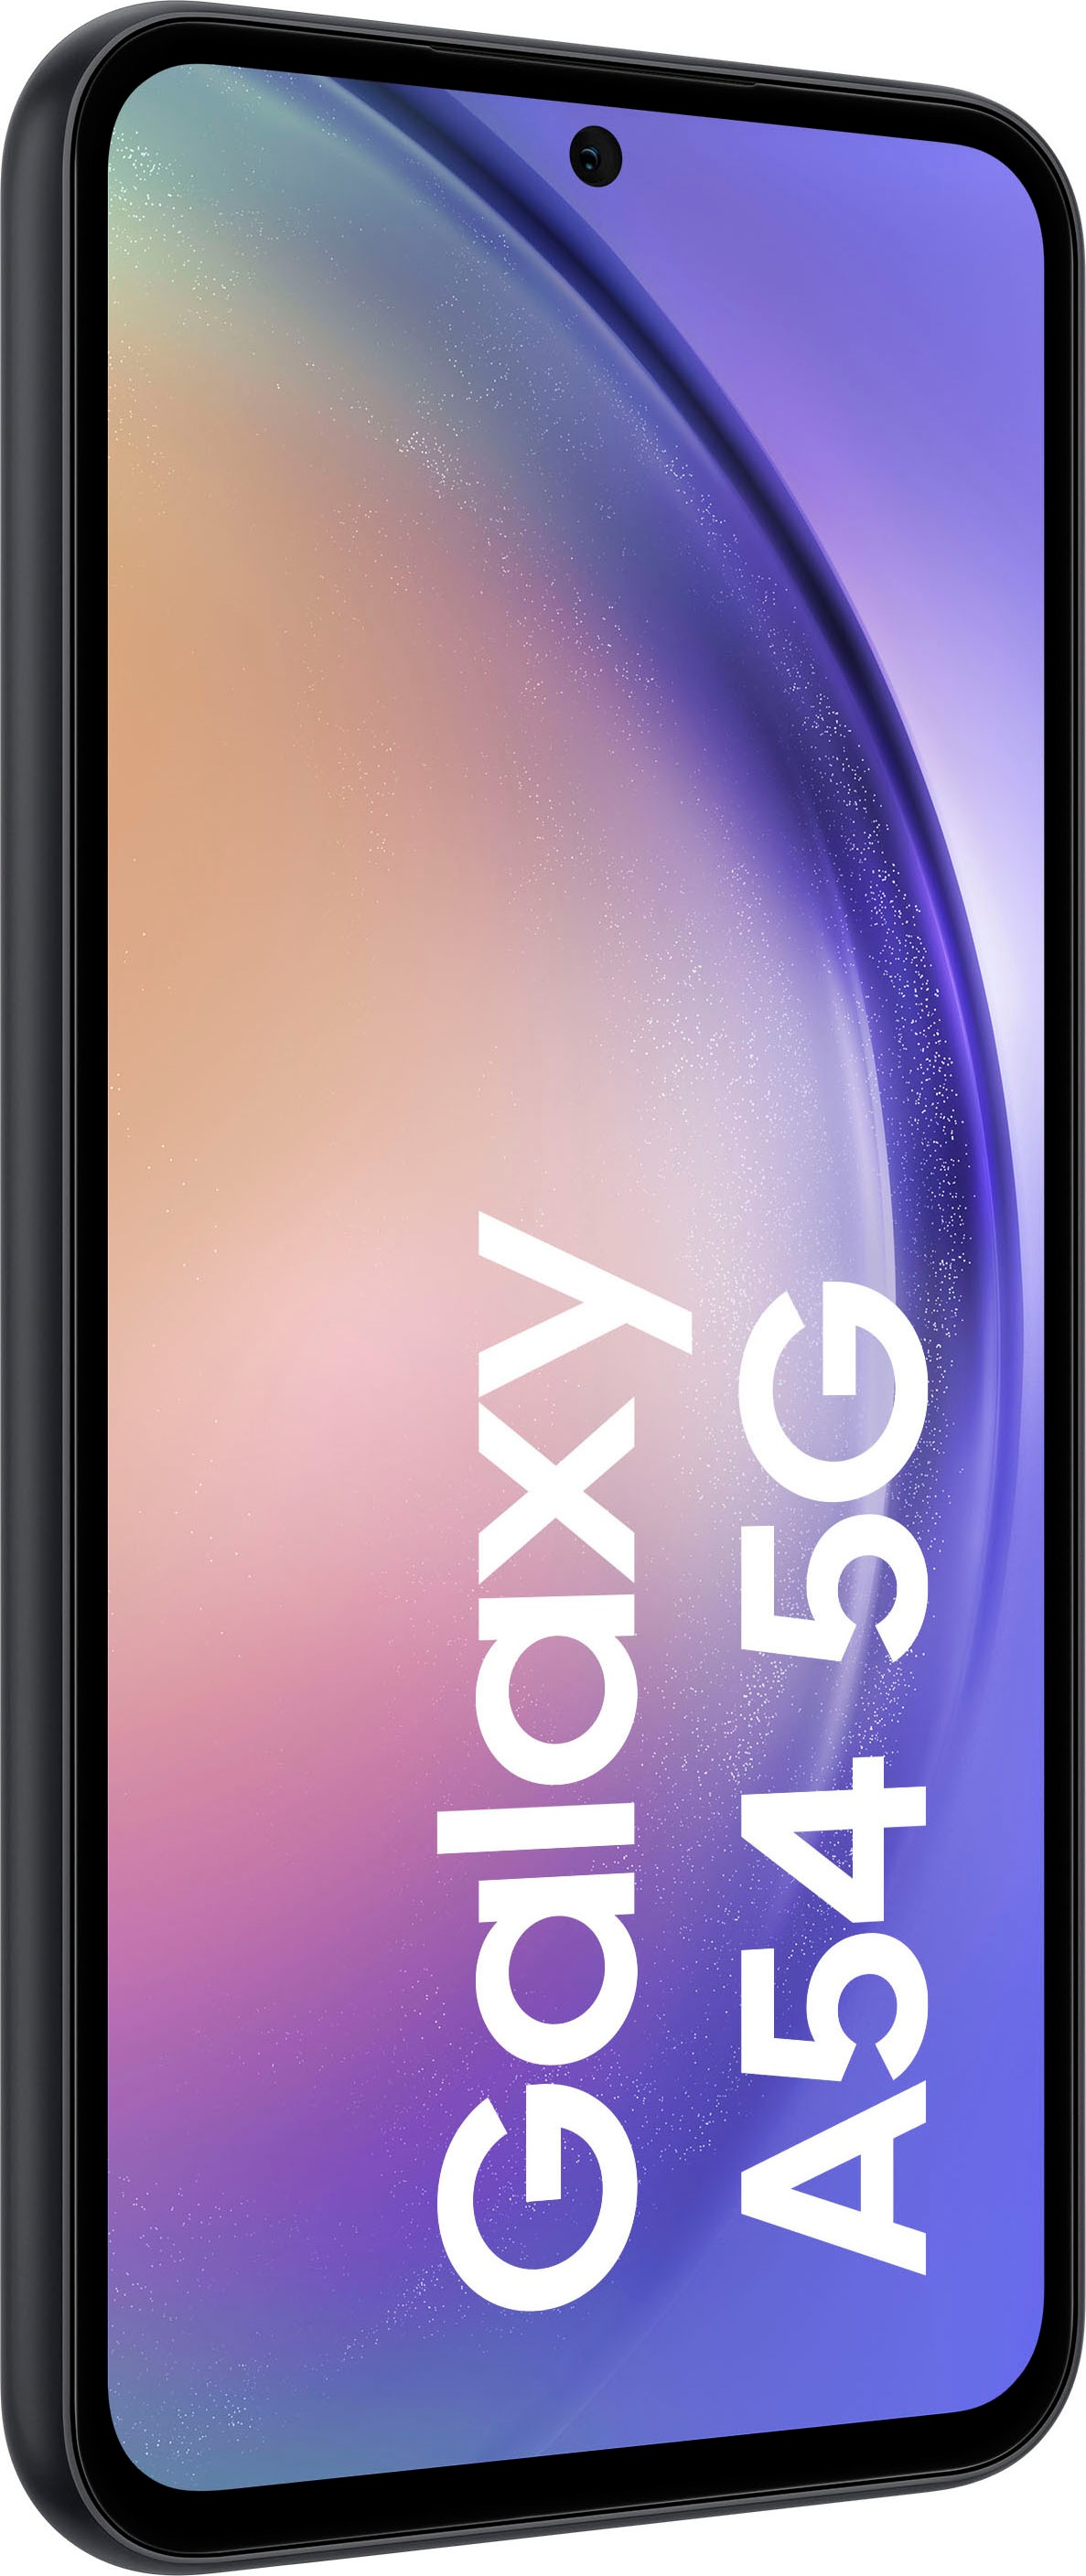 Samsung Smartphone »Galaxy A54 5G 256GB«, schwarz, 16,31 cm/6,4 Zoll, 256 GB Speicherplatz, 50 MP Kamera